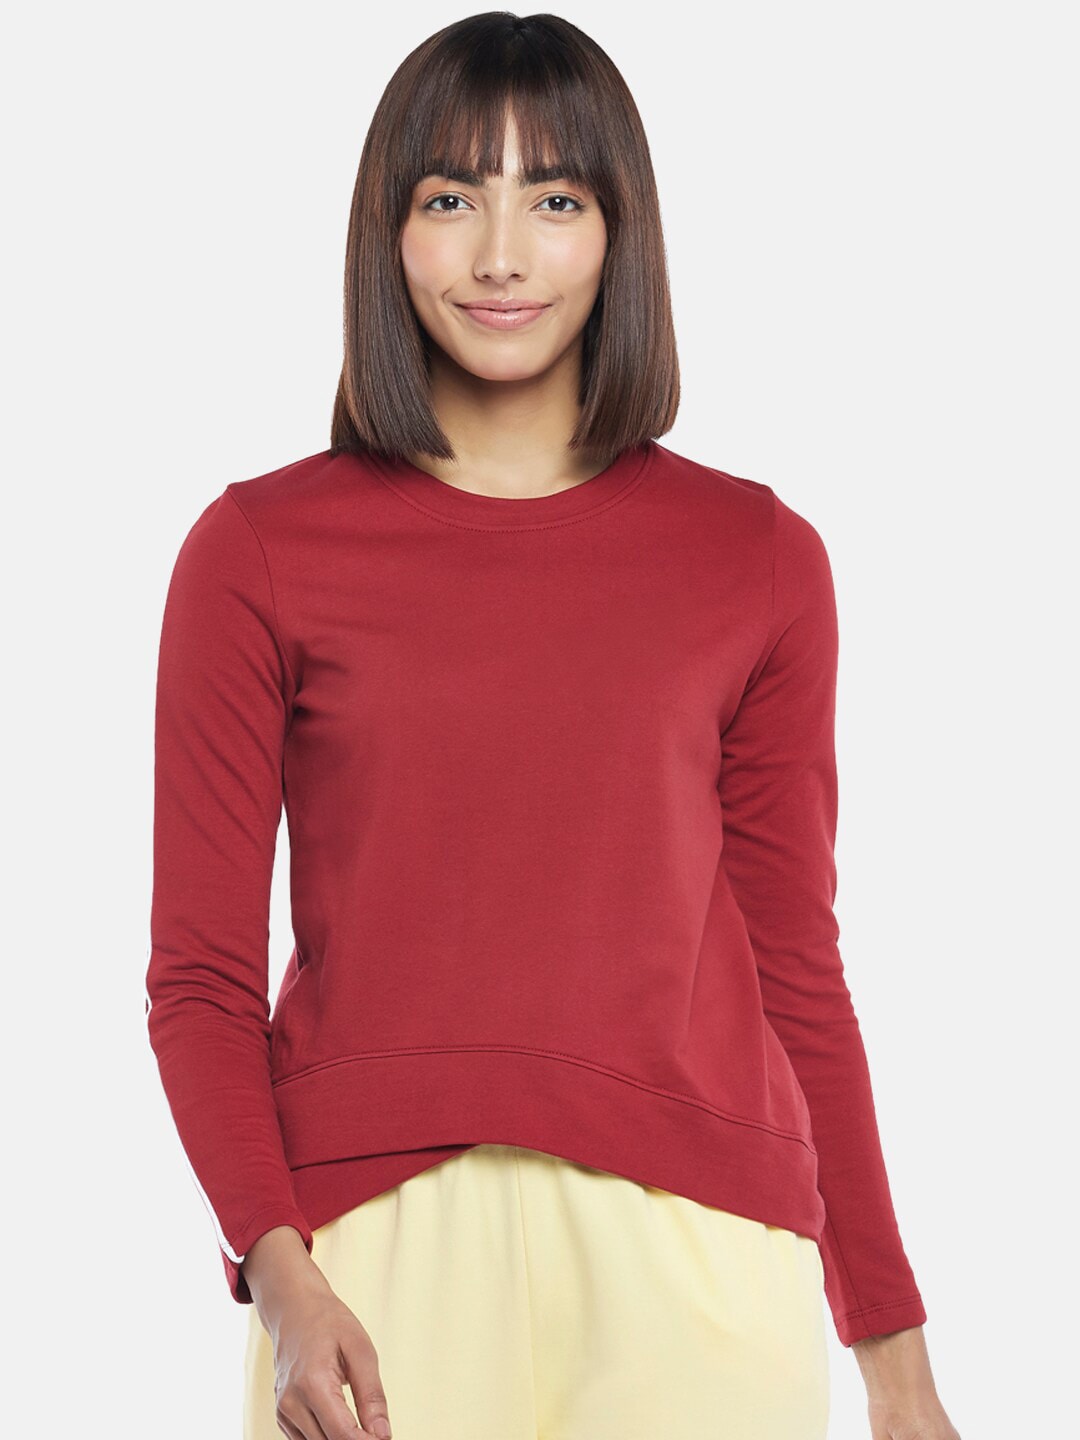 Ajile by Pantaloons Women Maroon Solid Sweatshirt Price in India